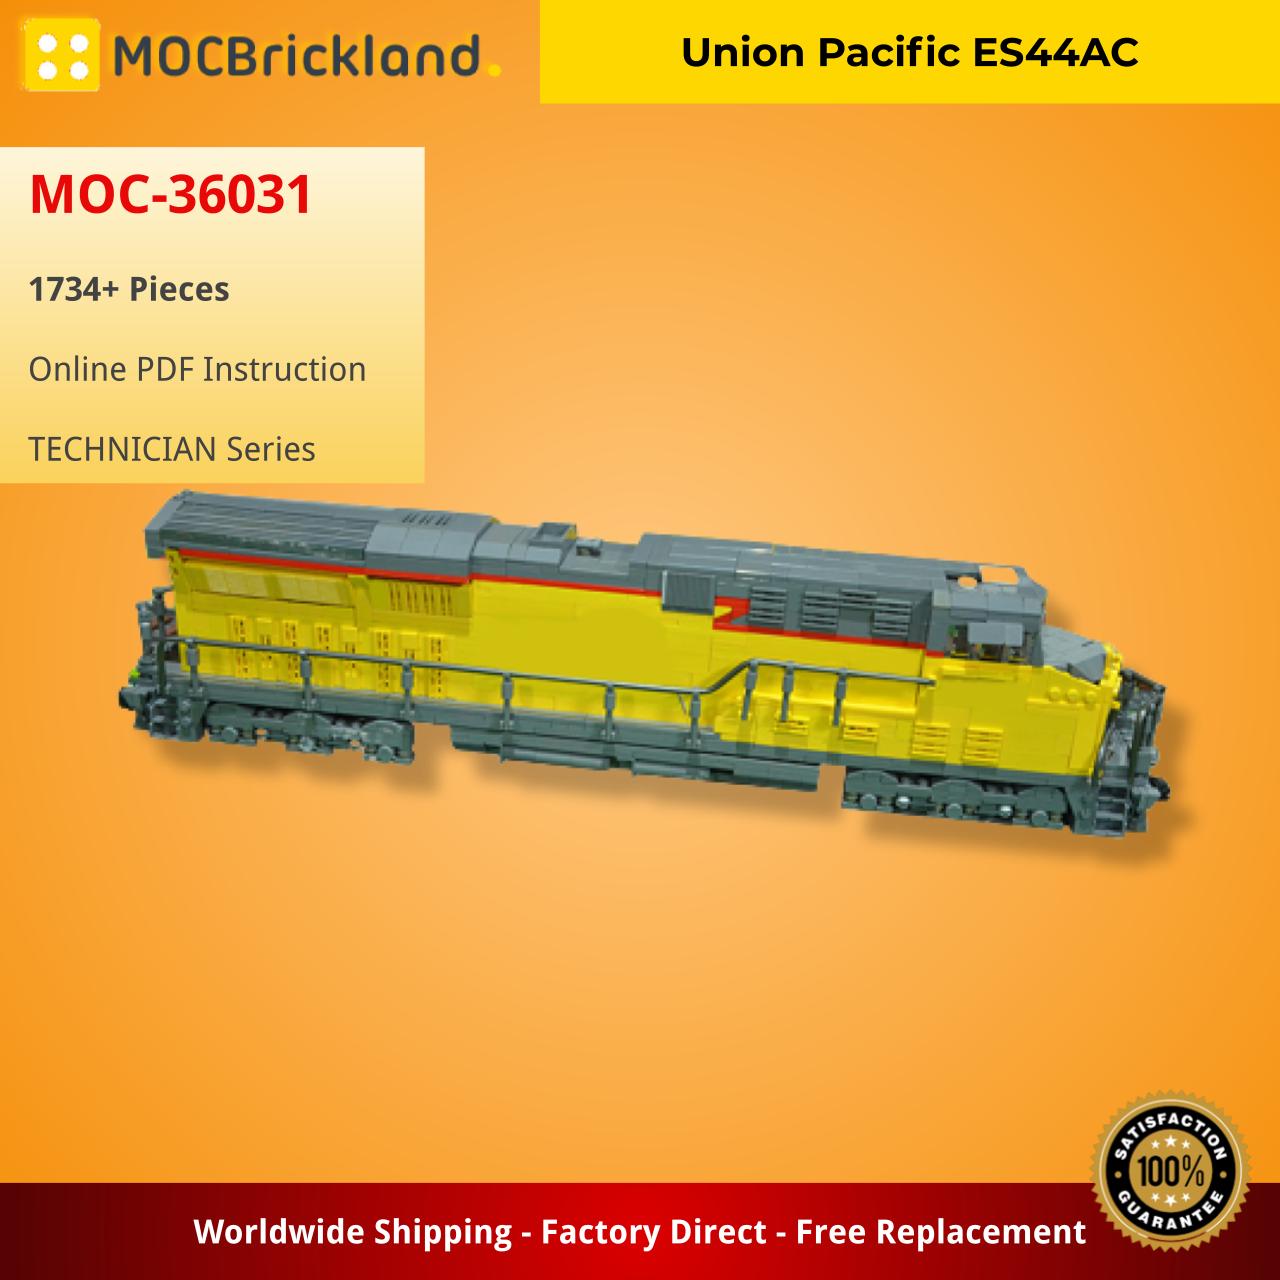 MOCBRICKLAND MOC-36031 Union Pacific ES44AC